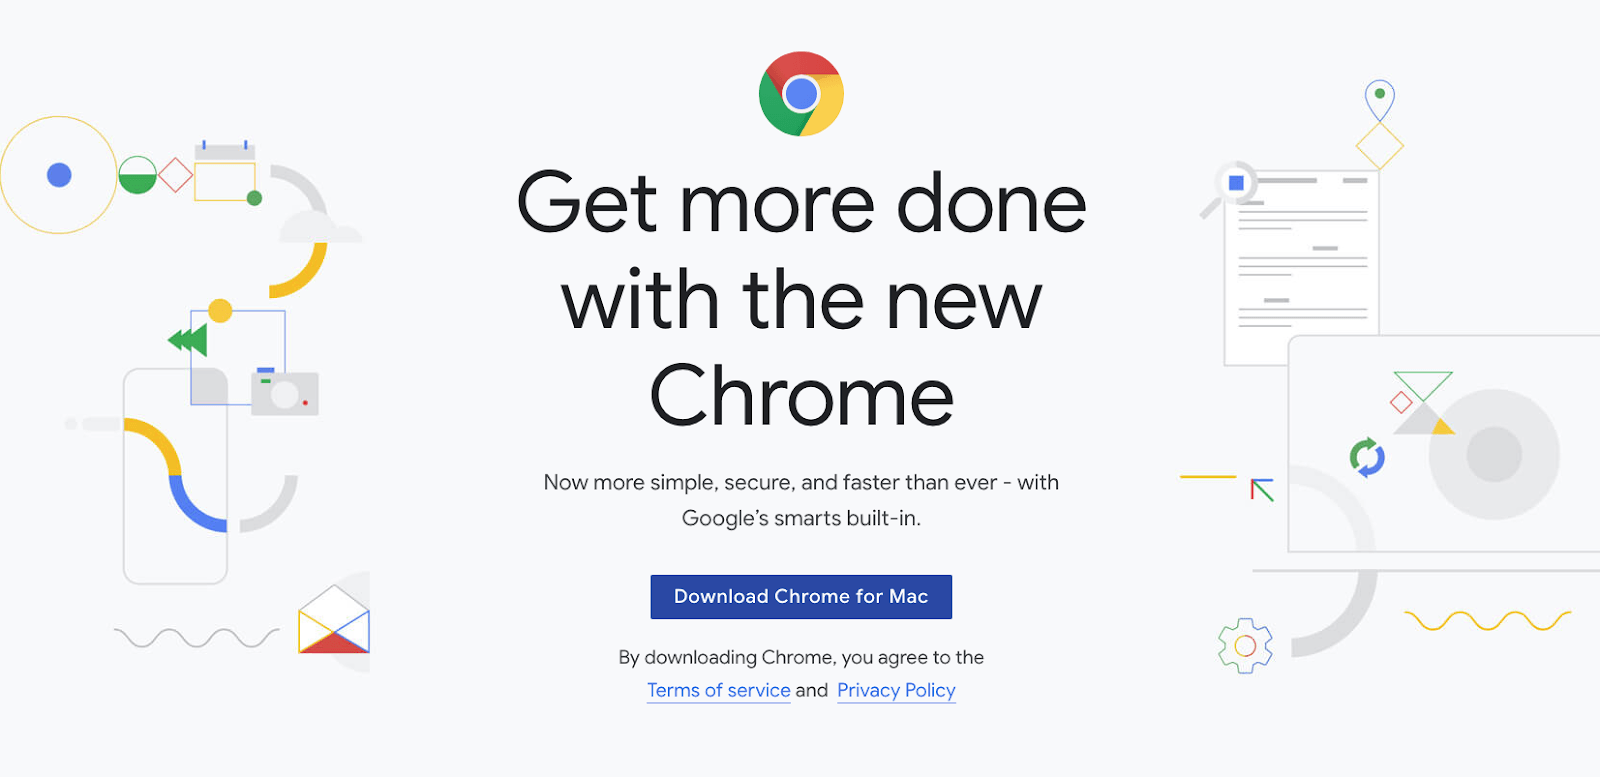 Google Chrome gets updates across iOS and desktop